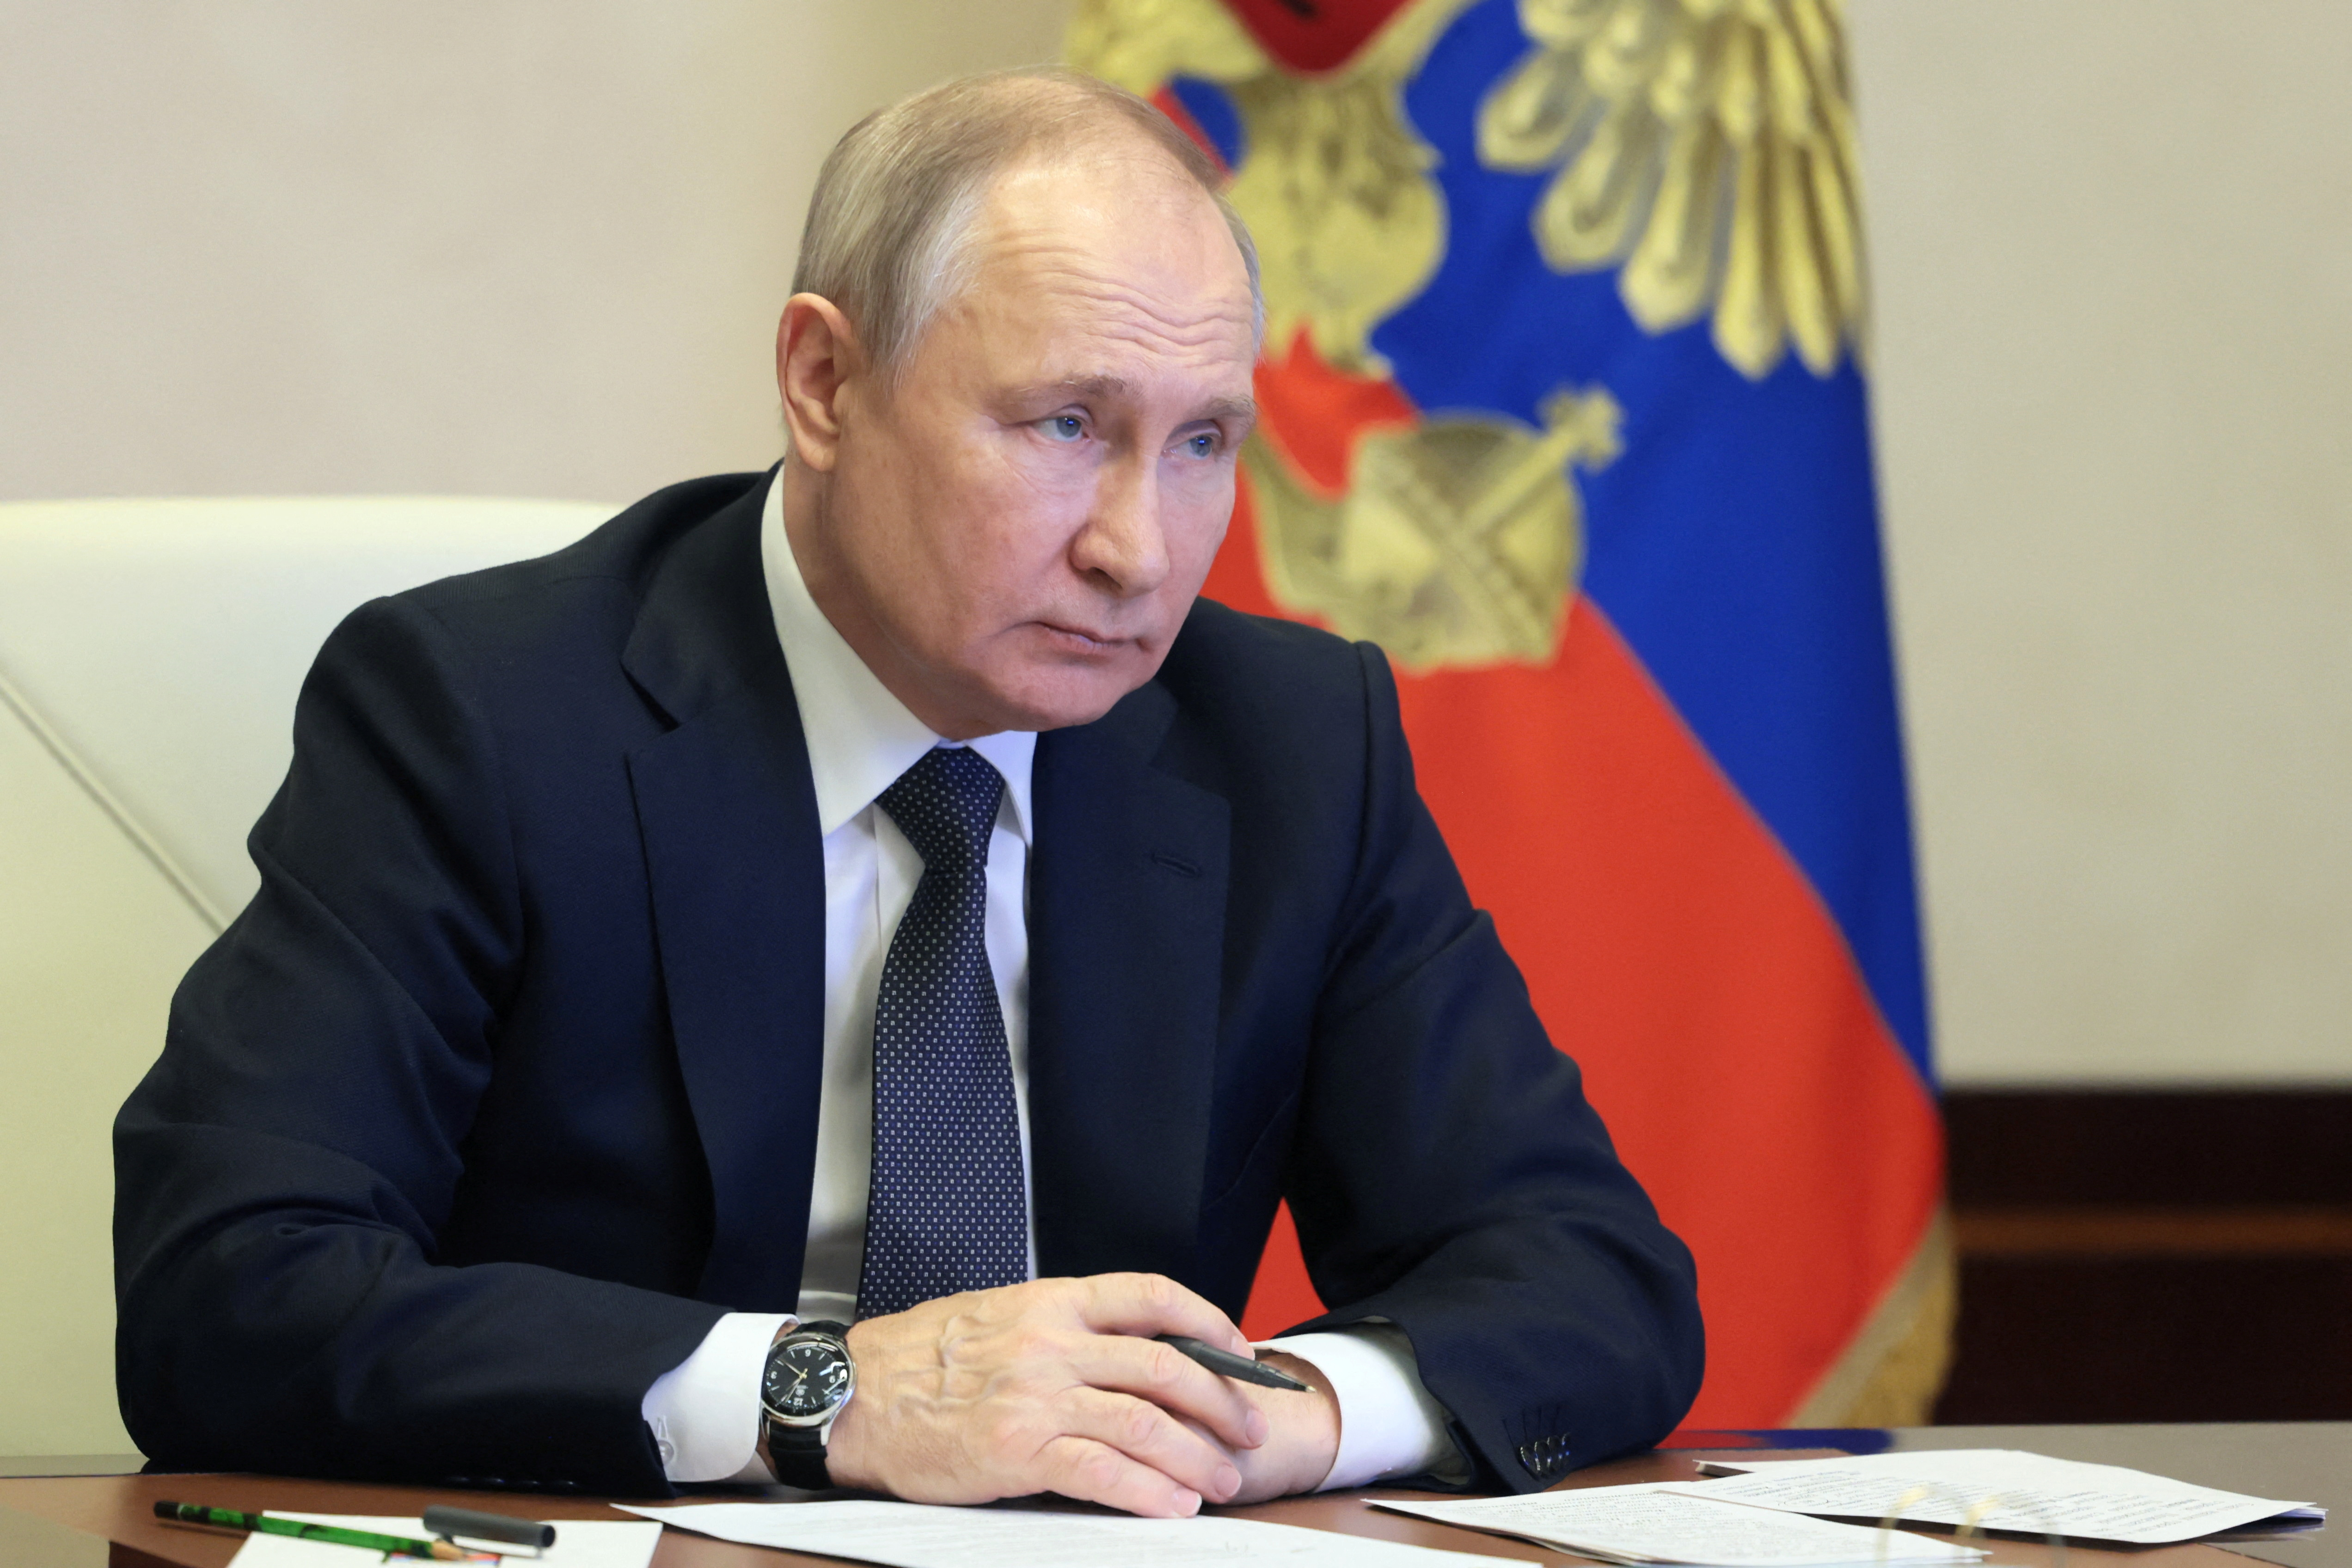 El presidente de Rusia, Vladimir Putin. Sputnik/Mikhail Metzel/Pool via REUTERS